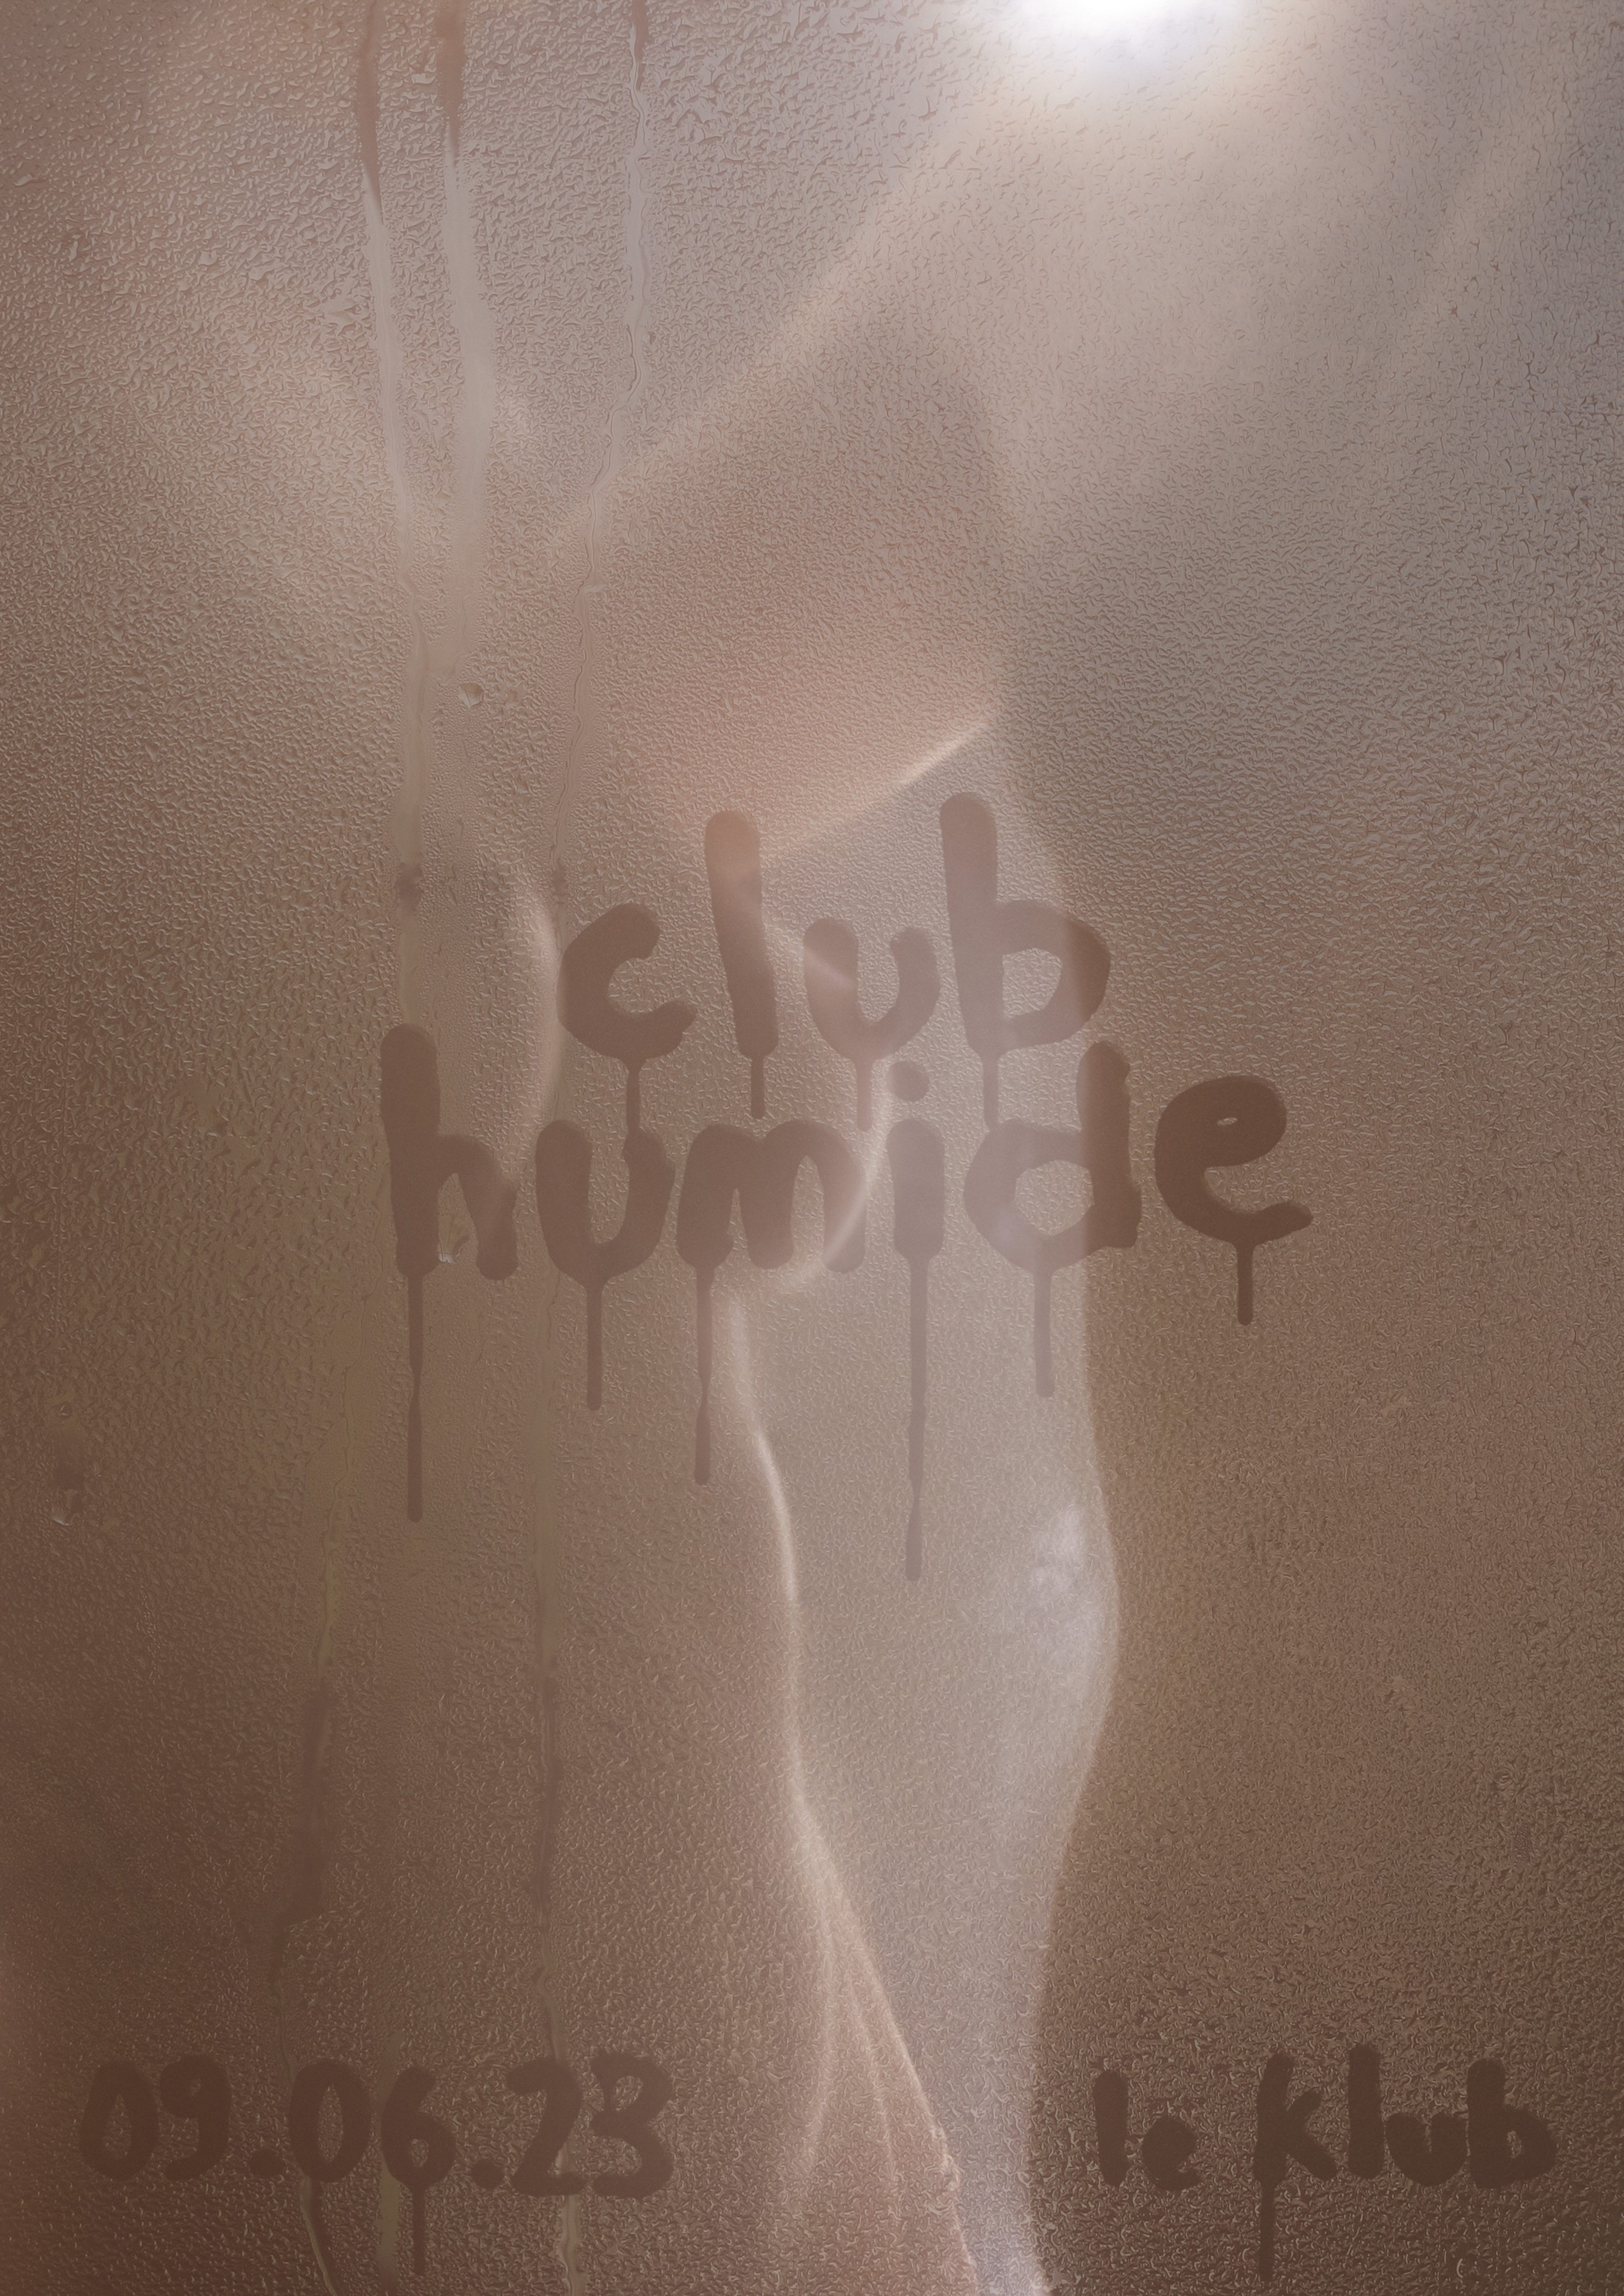 CLUB HUMIDE ■ 09.05